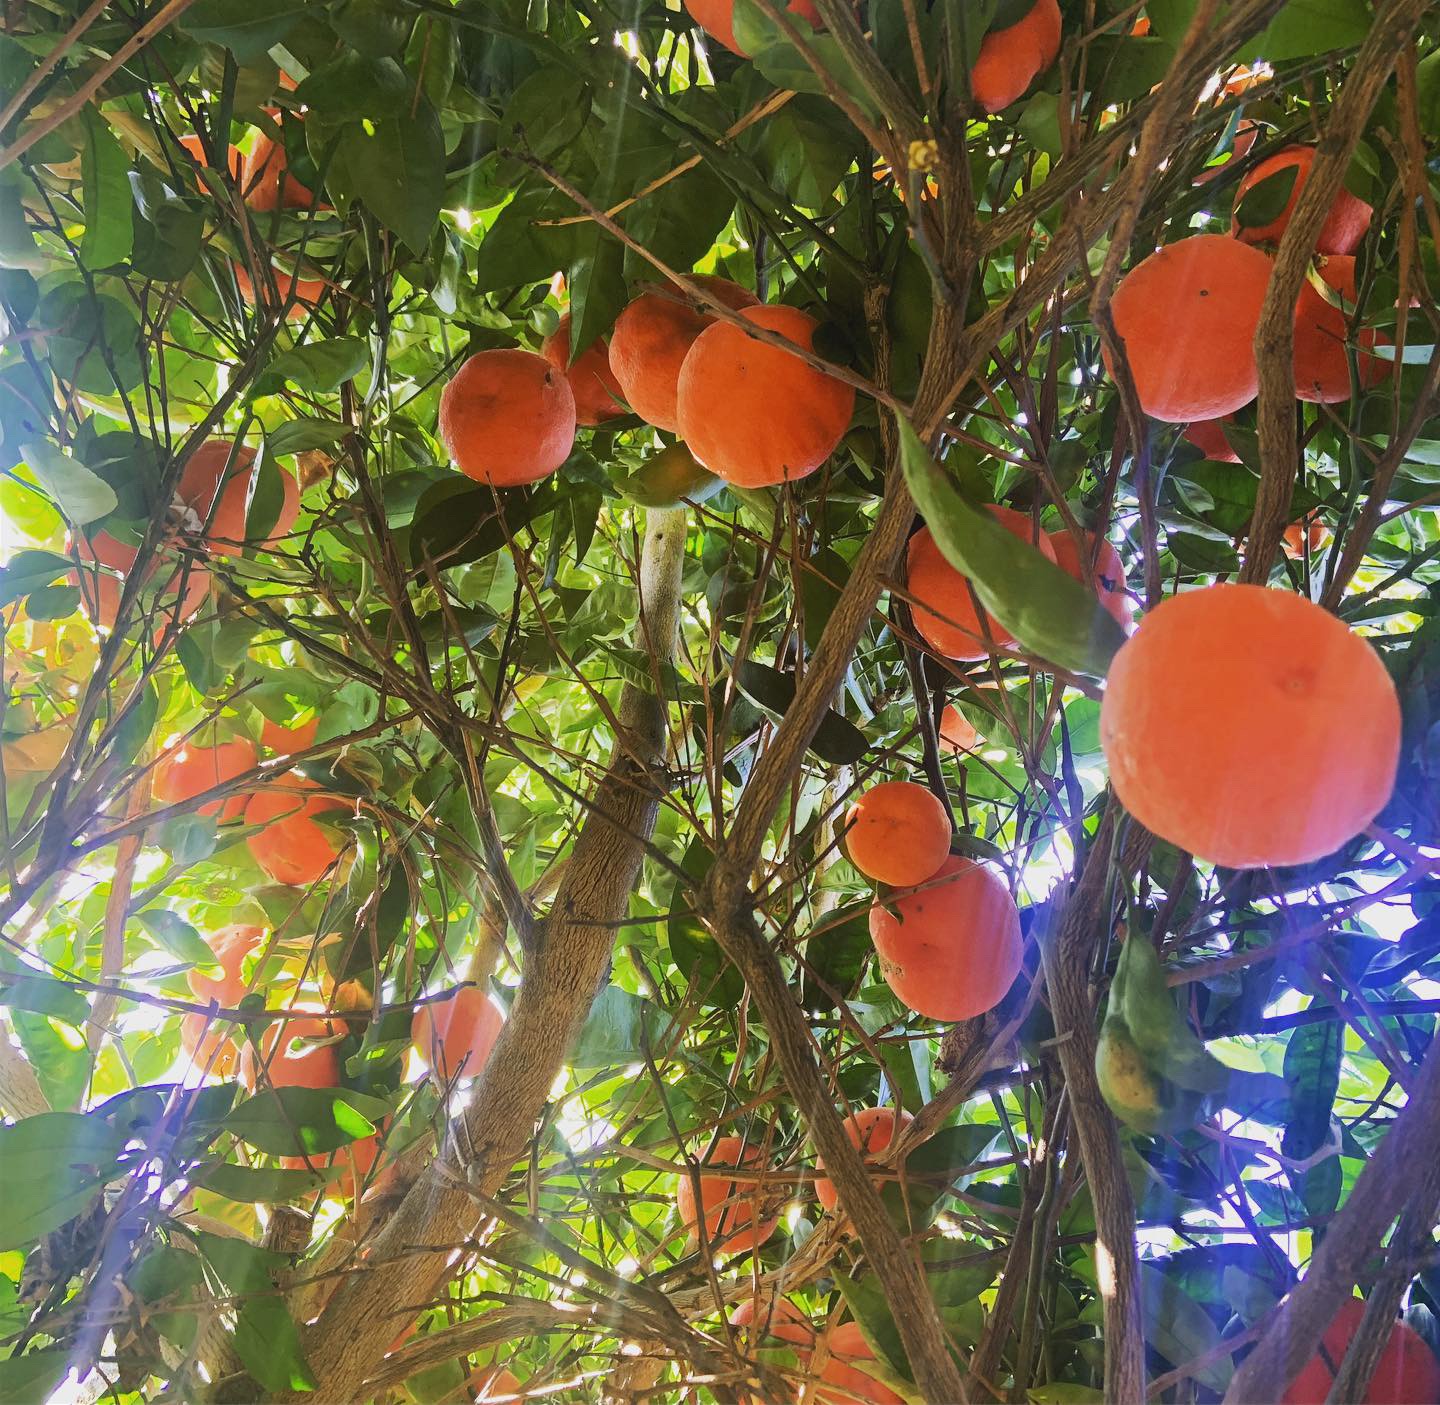 Citrus Tree by Long Beach Organic. Photo by: SolShock Media